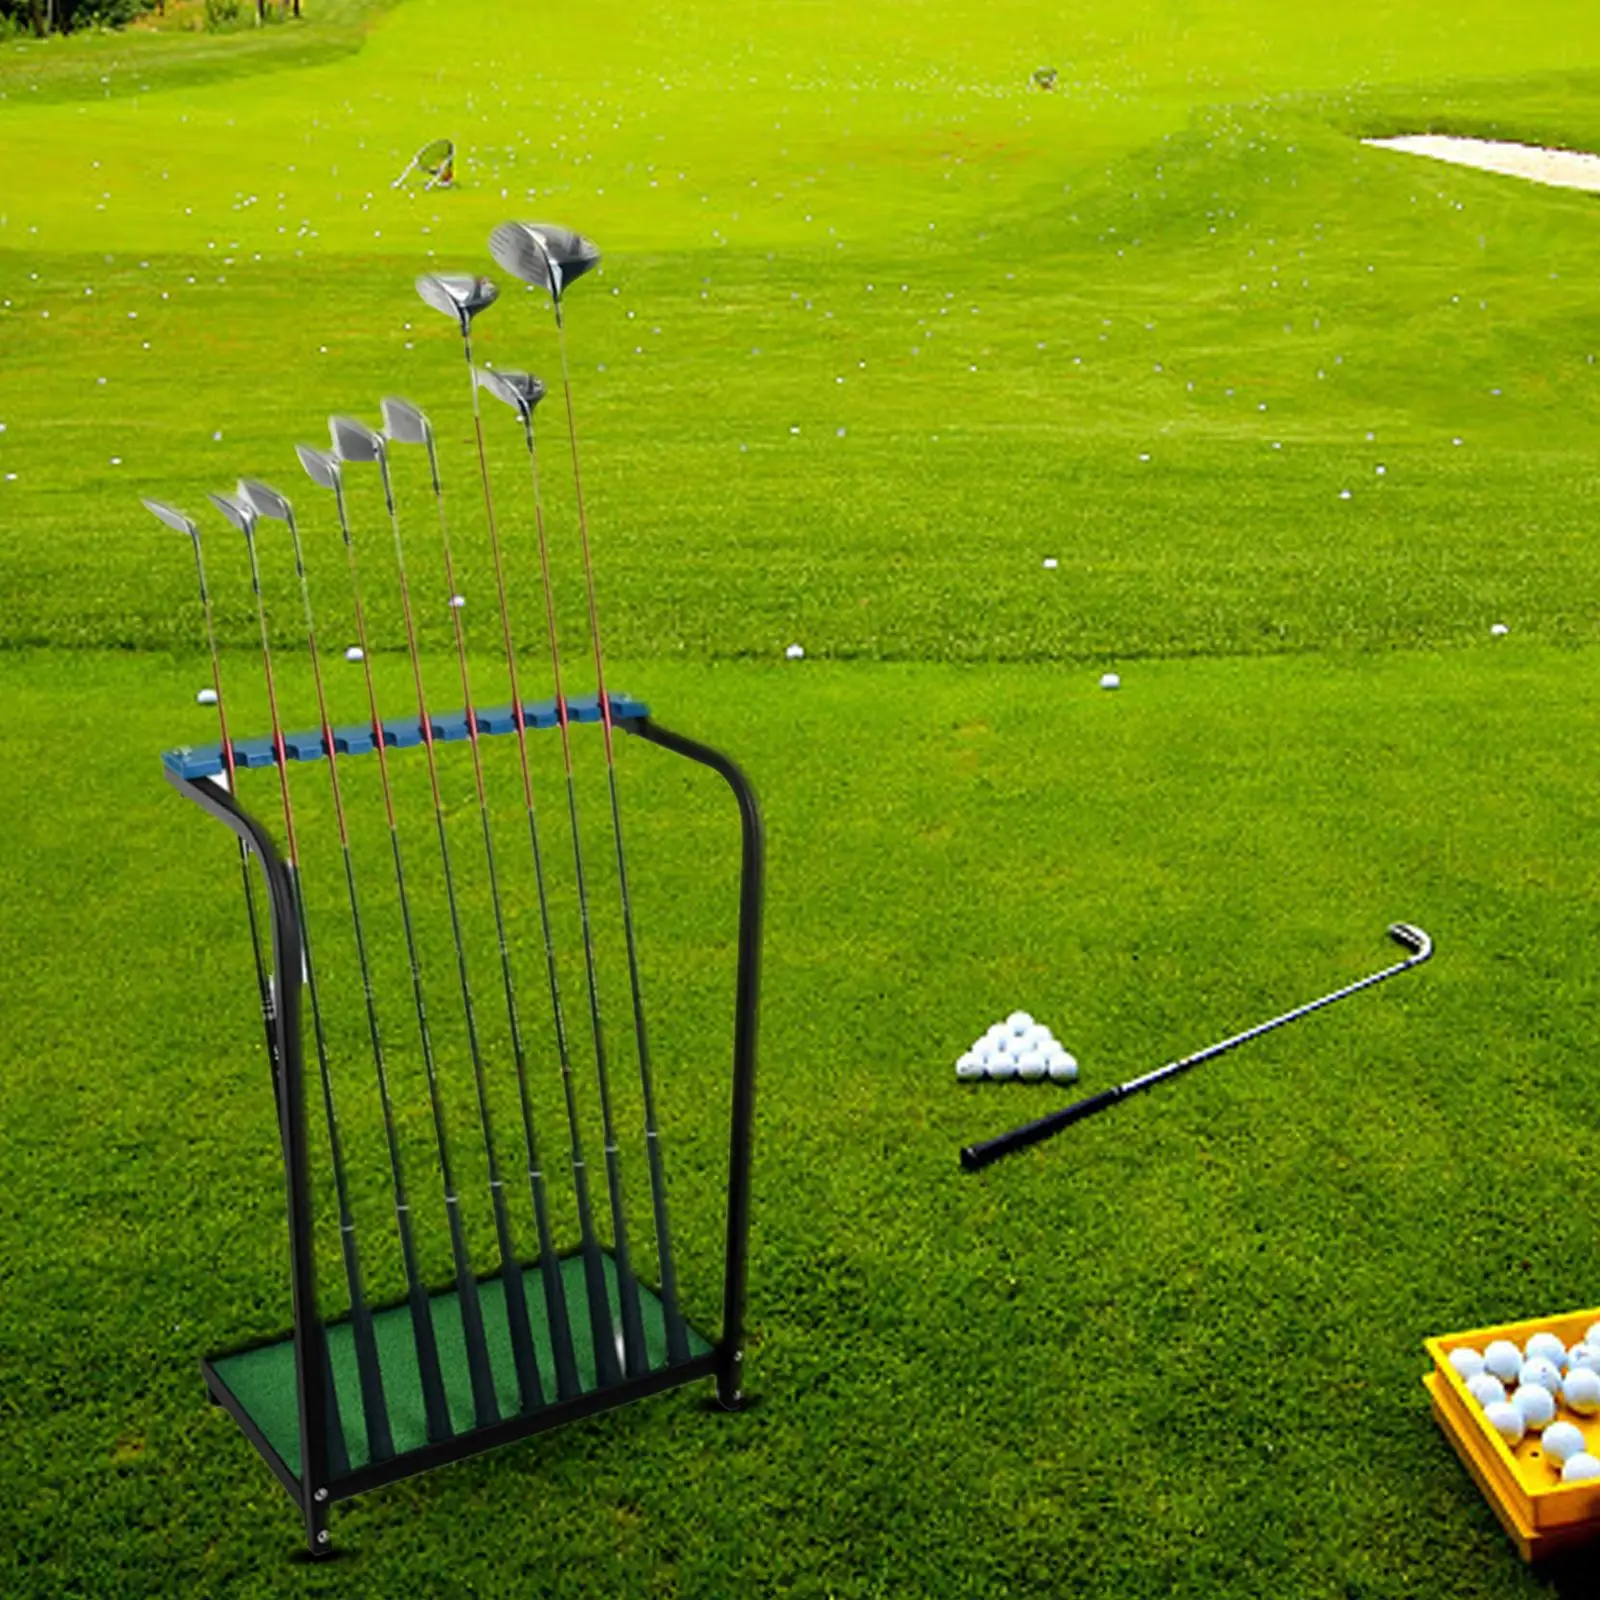 9 Holes Golf Club Rack Golf Pole Stand Storage Equipment Golf Club Display for Indoor